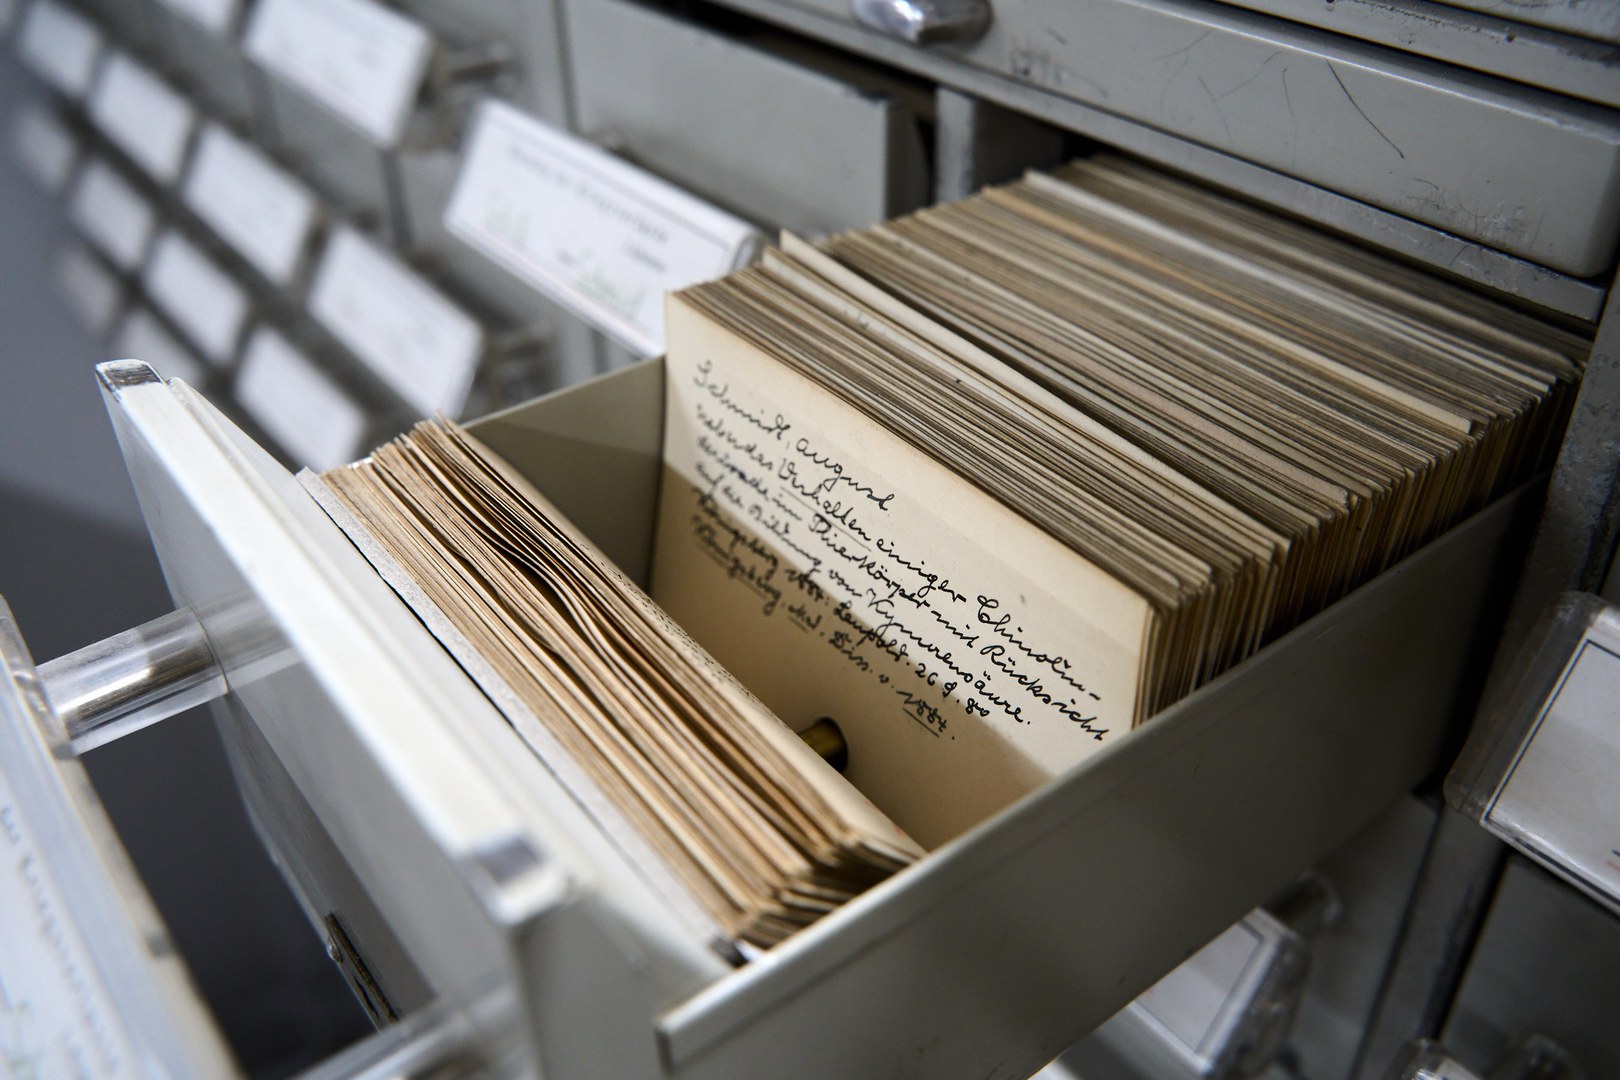 The “Katalog der Kriegsverluste” lists the books that were destroyed in the Second World War